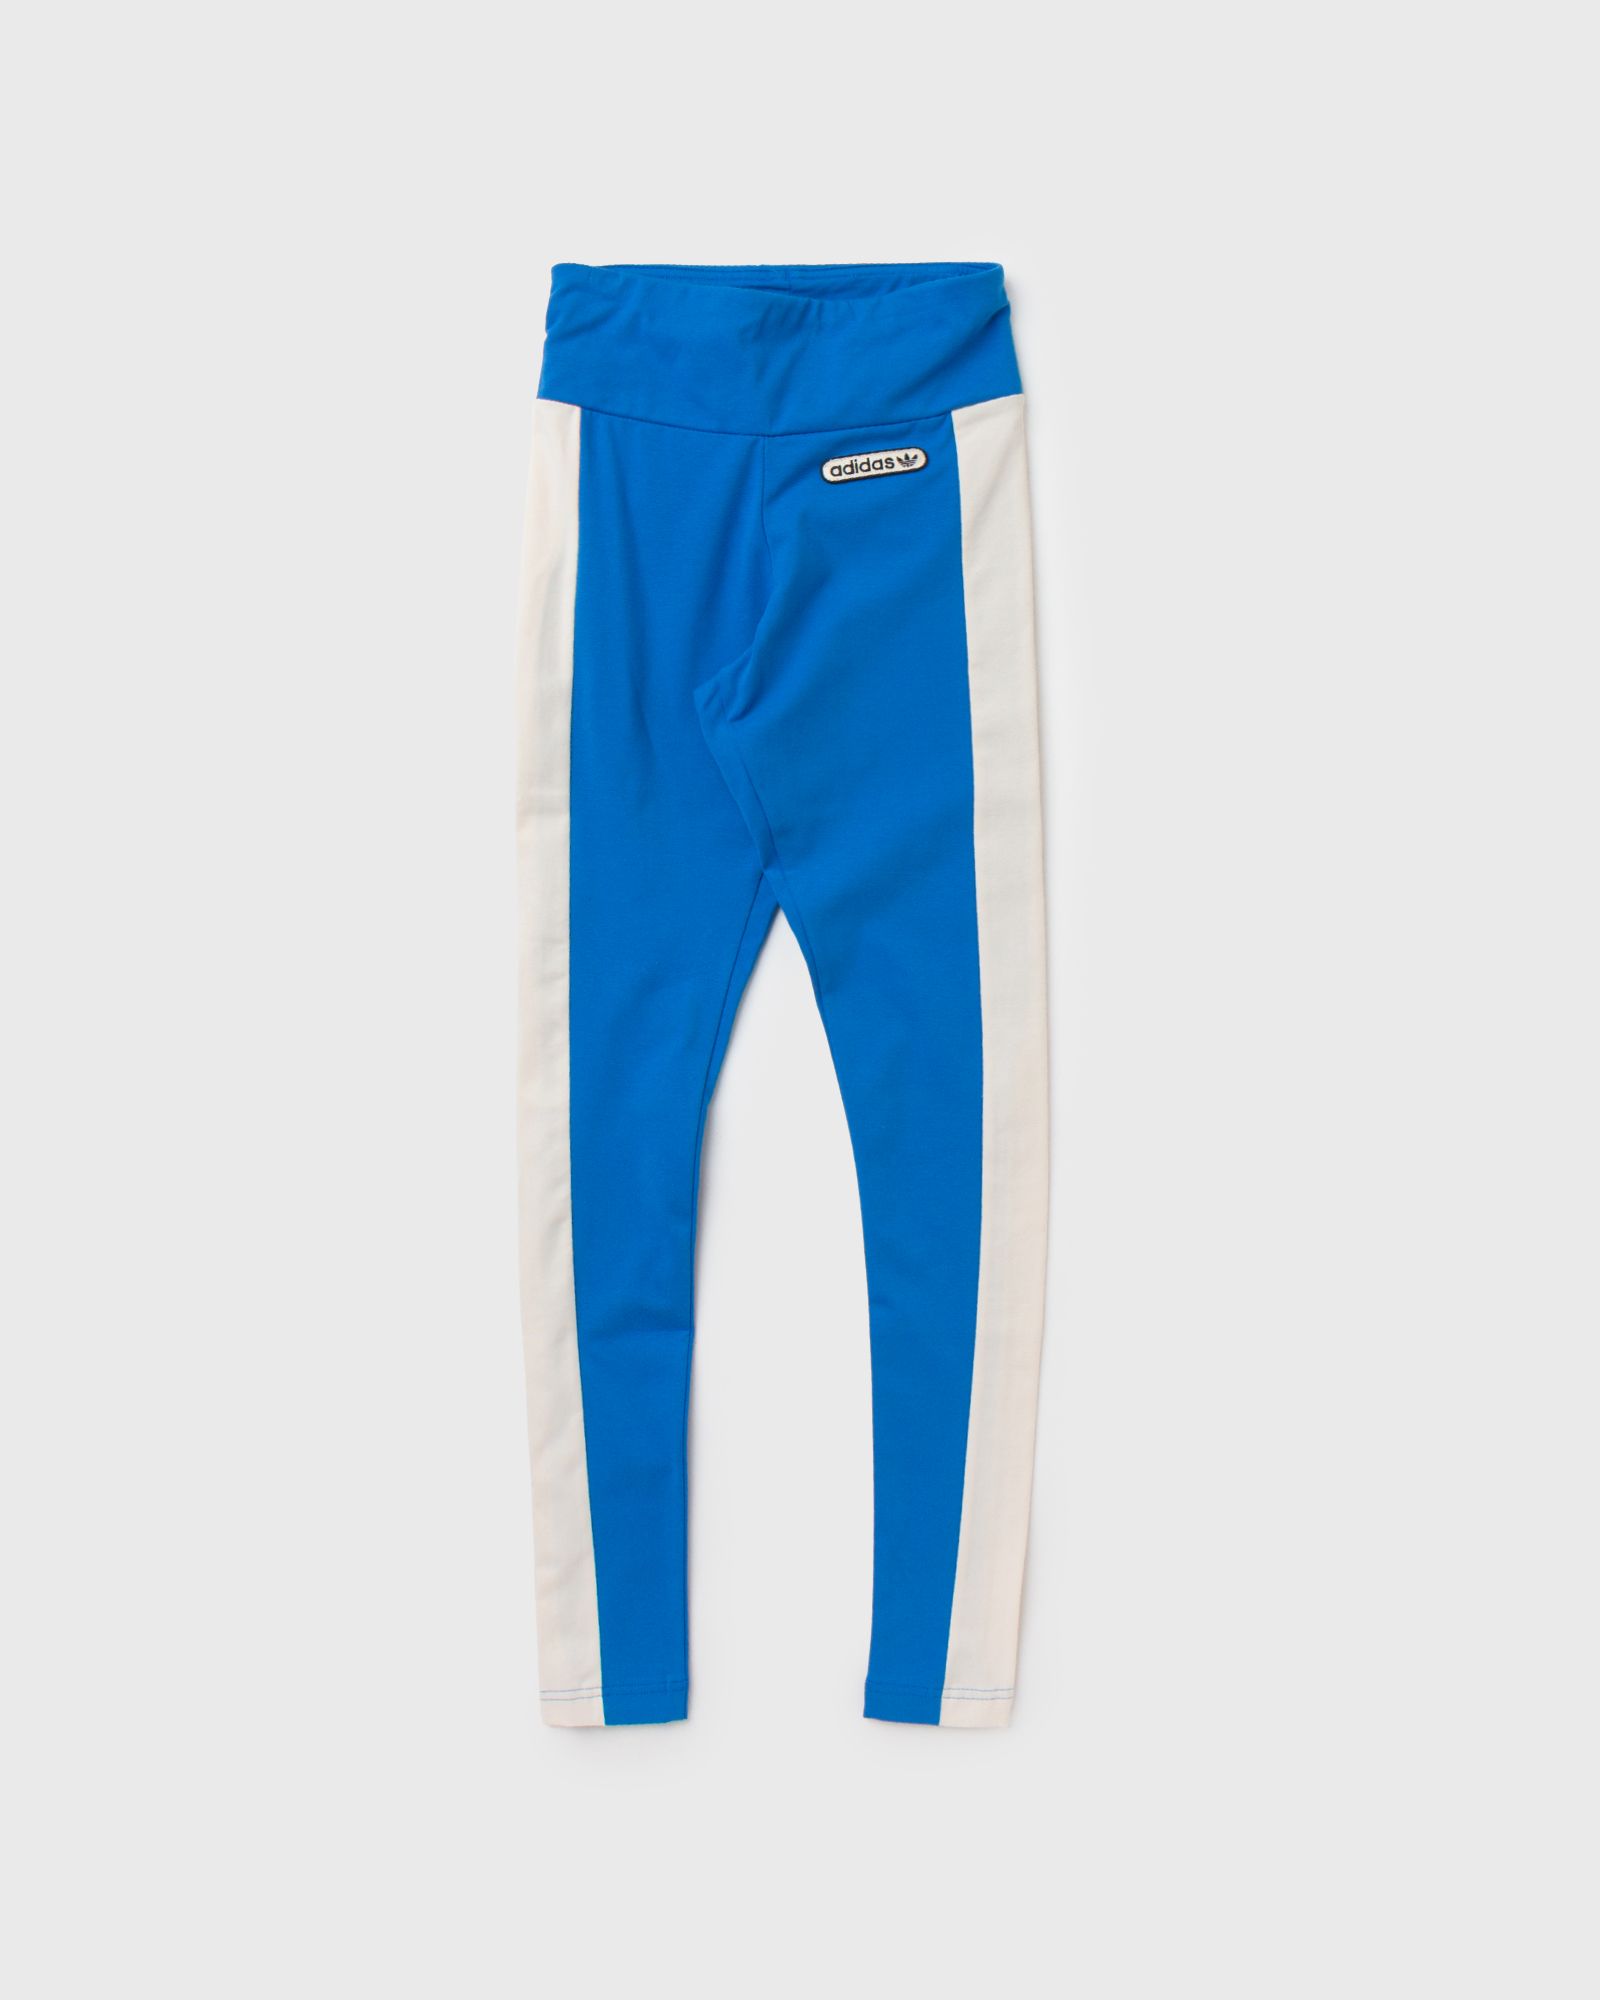 Adidas - wmns leggings women leggings & tights blue in größe:l